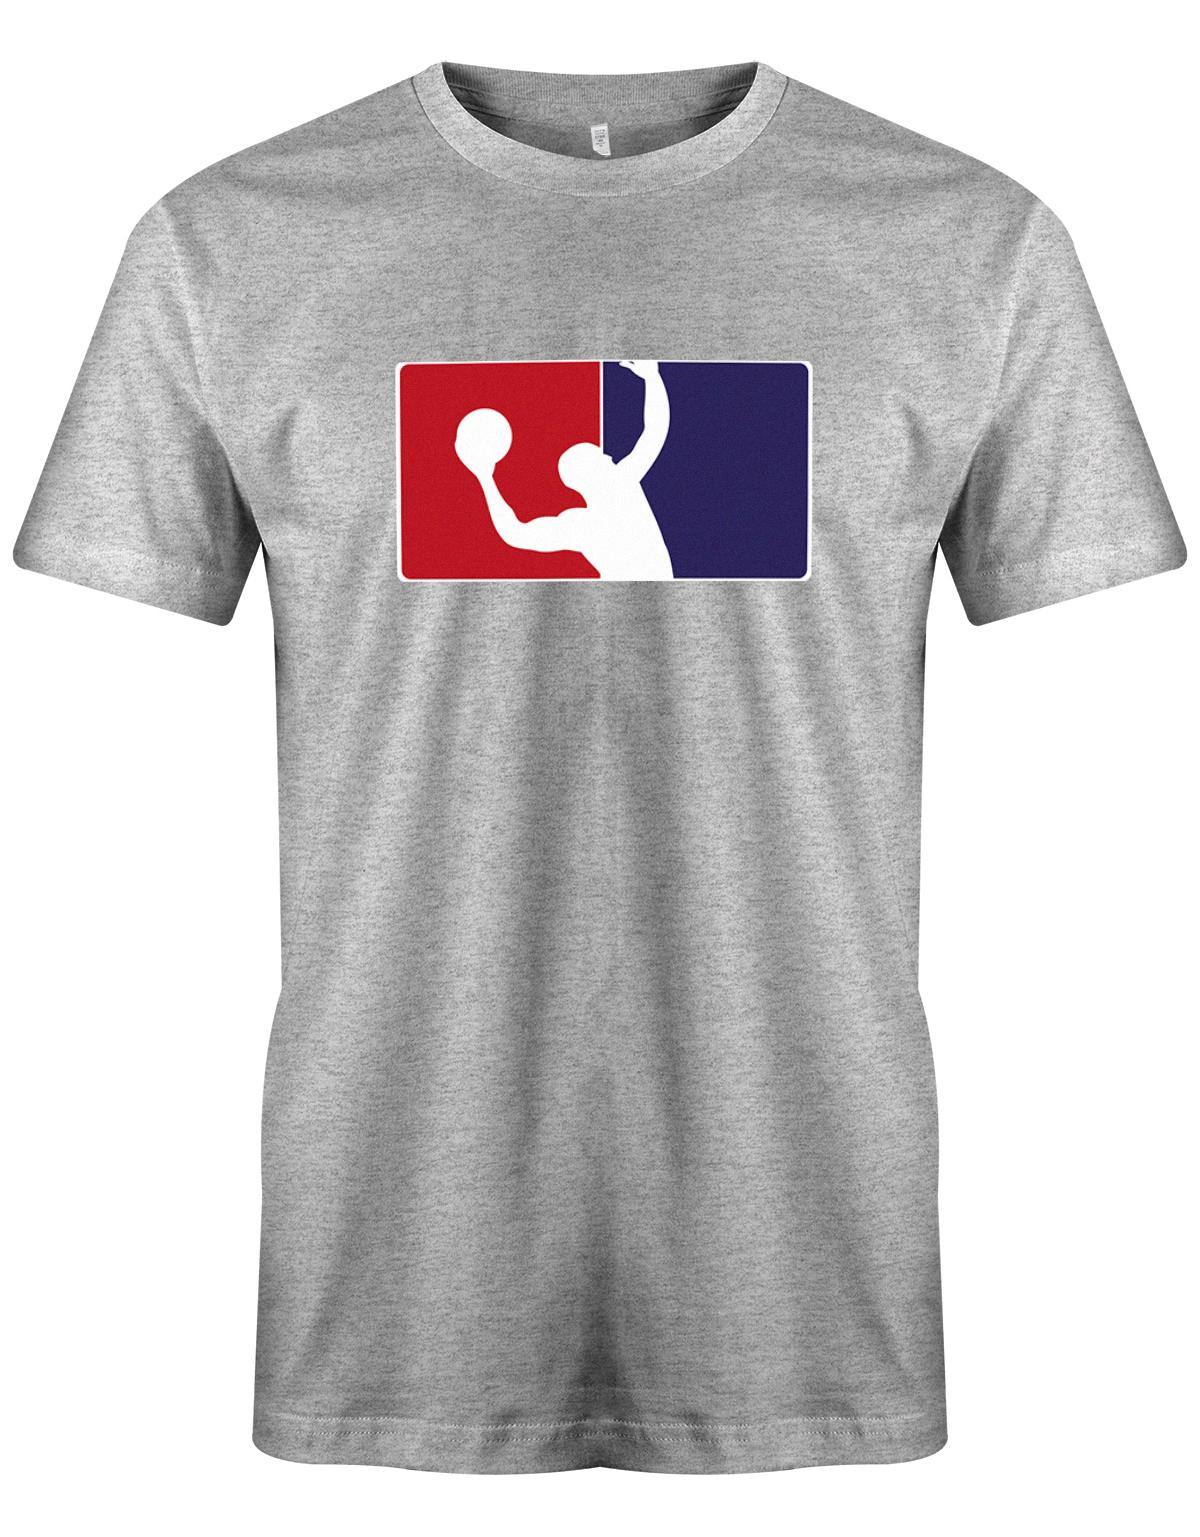 Basketball-Logo-herren-Shirt-Grau